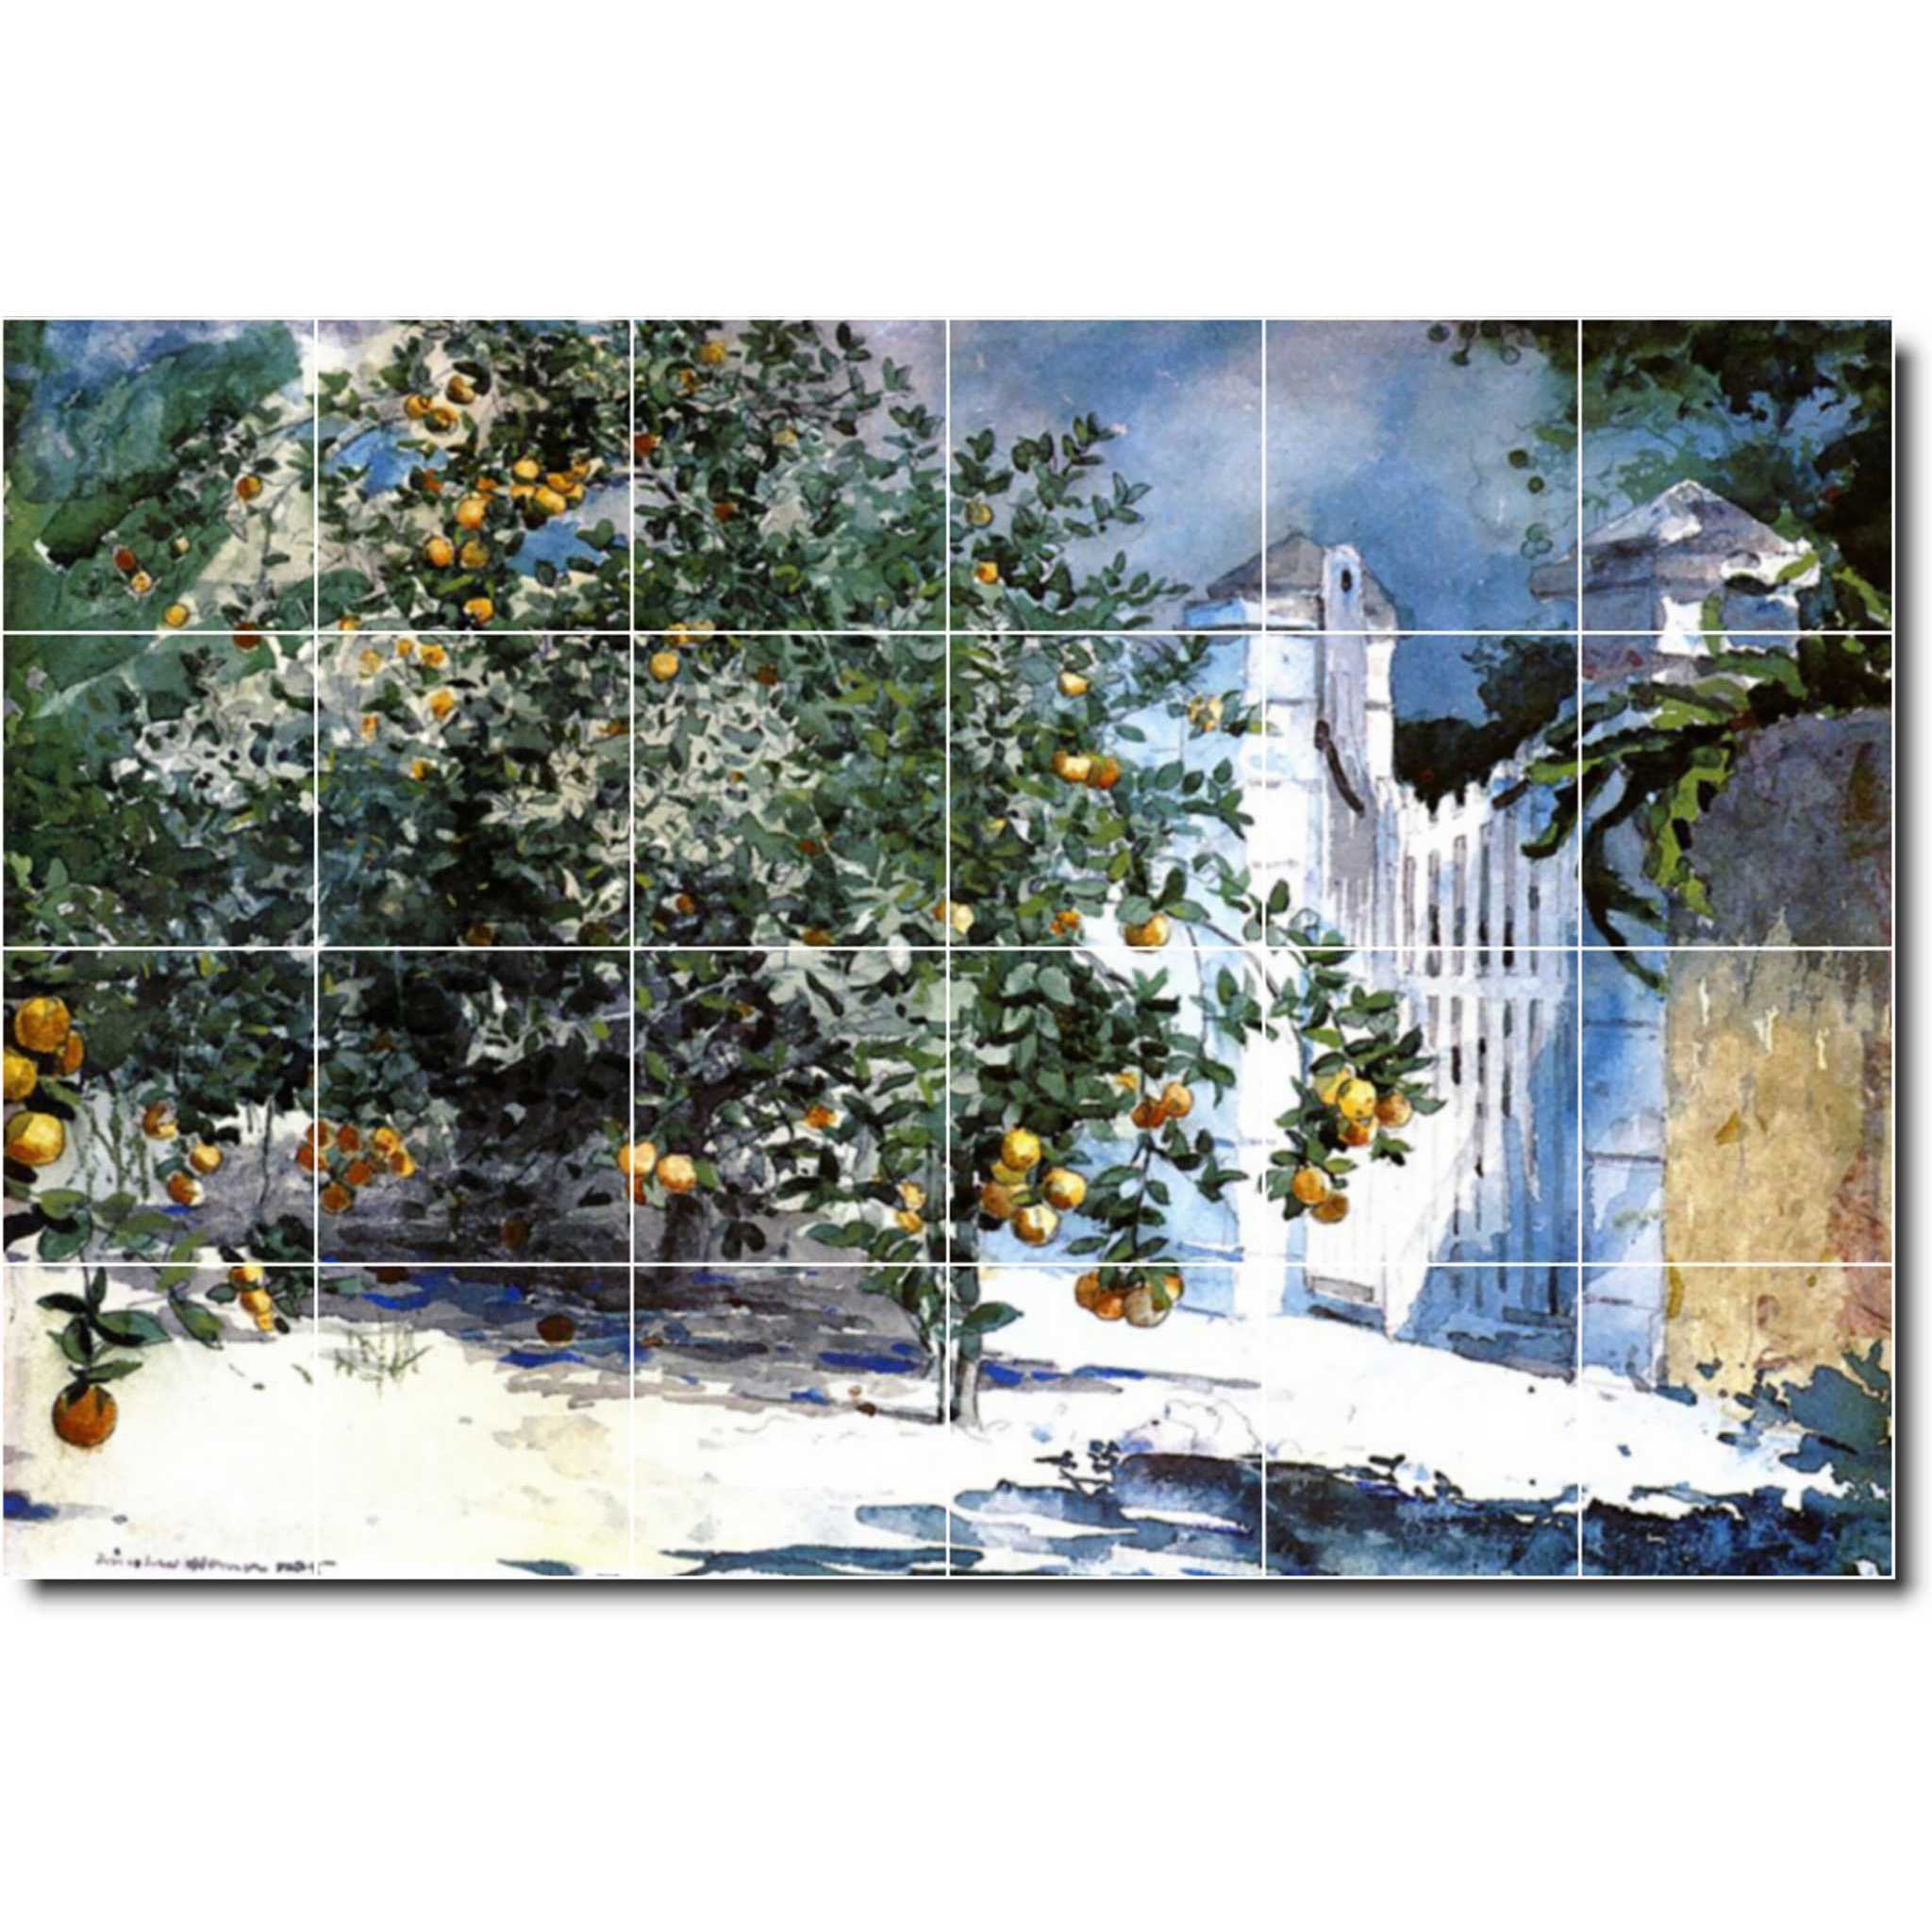 Winslow Homer Garden Painting Ceramic Tile Mural P04437-XL. 72"W x 48"H (24) 12x12 tiles